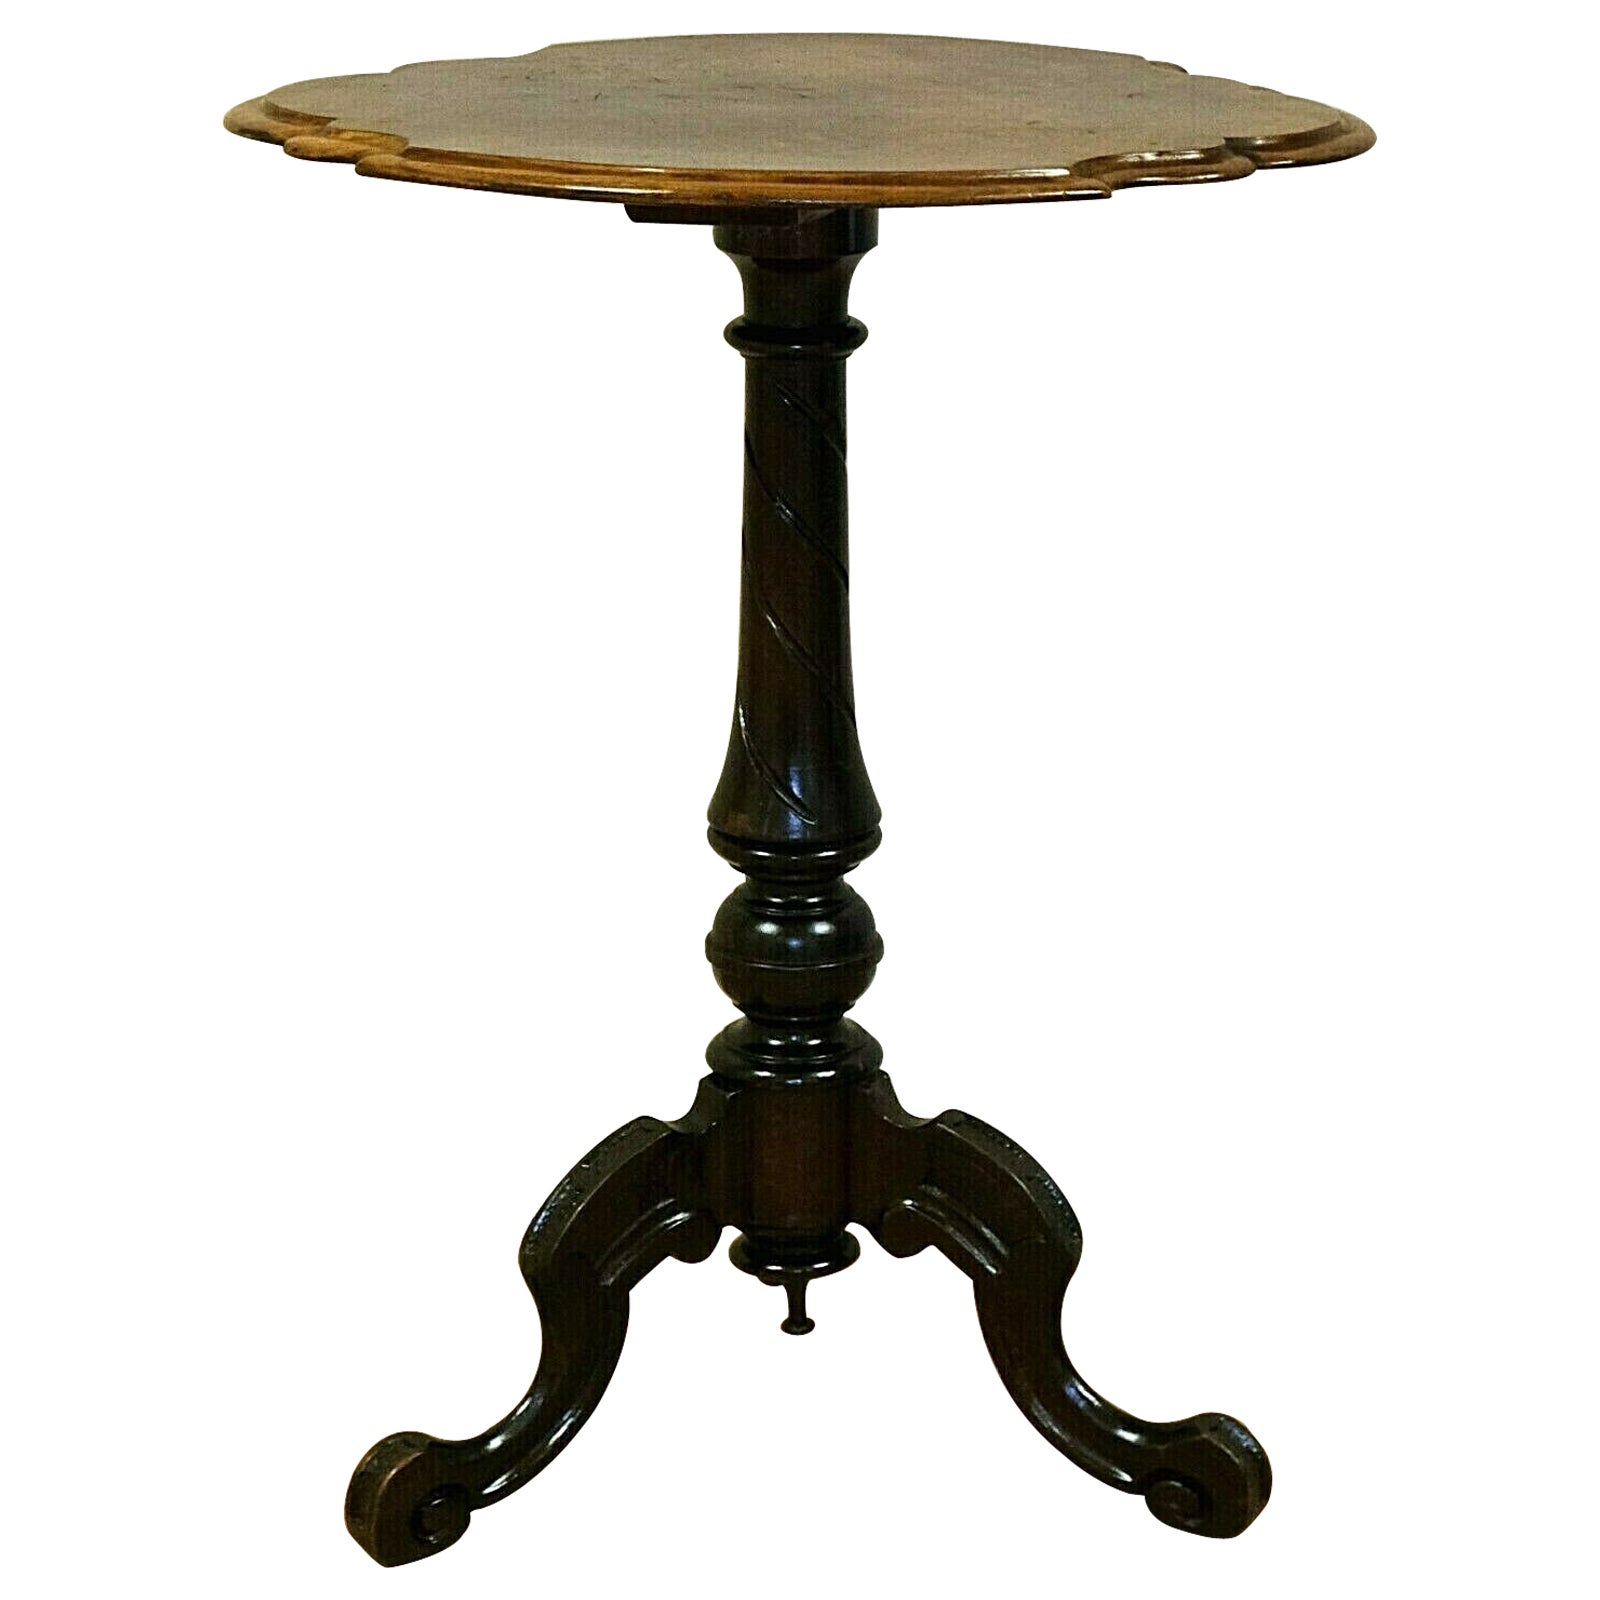 Victorian circa 1860 Burr Walnut Tripod Side End Table with Scalloped Edge